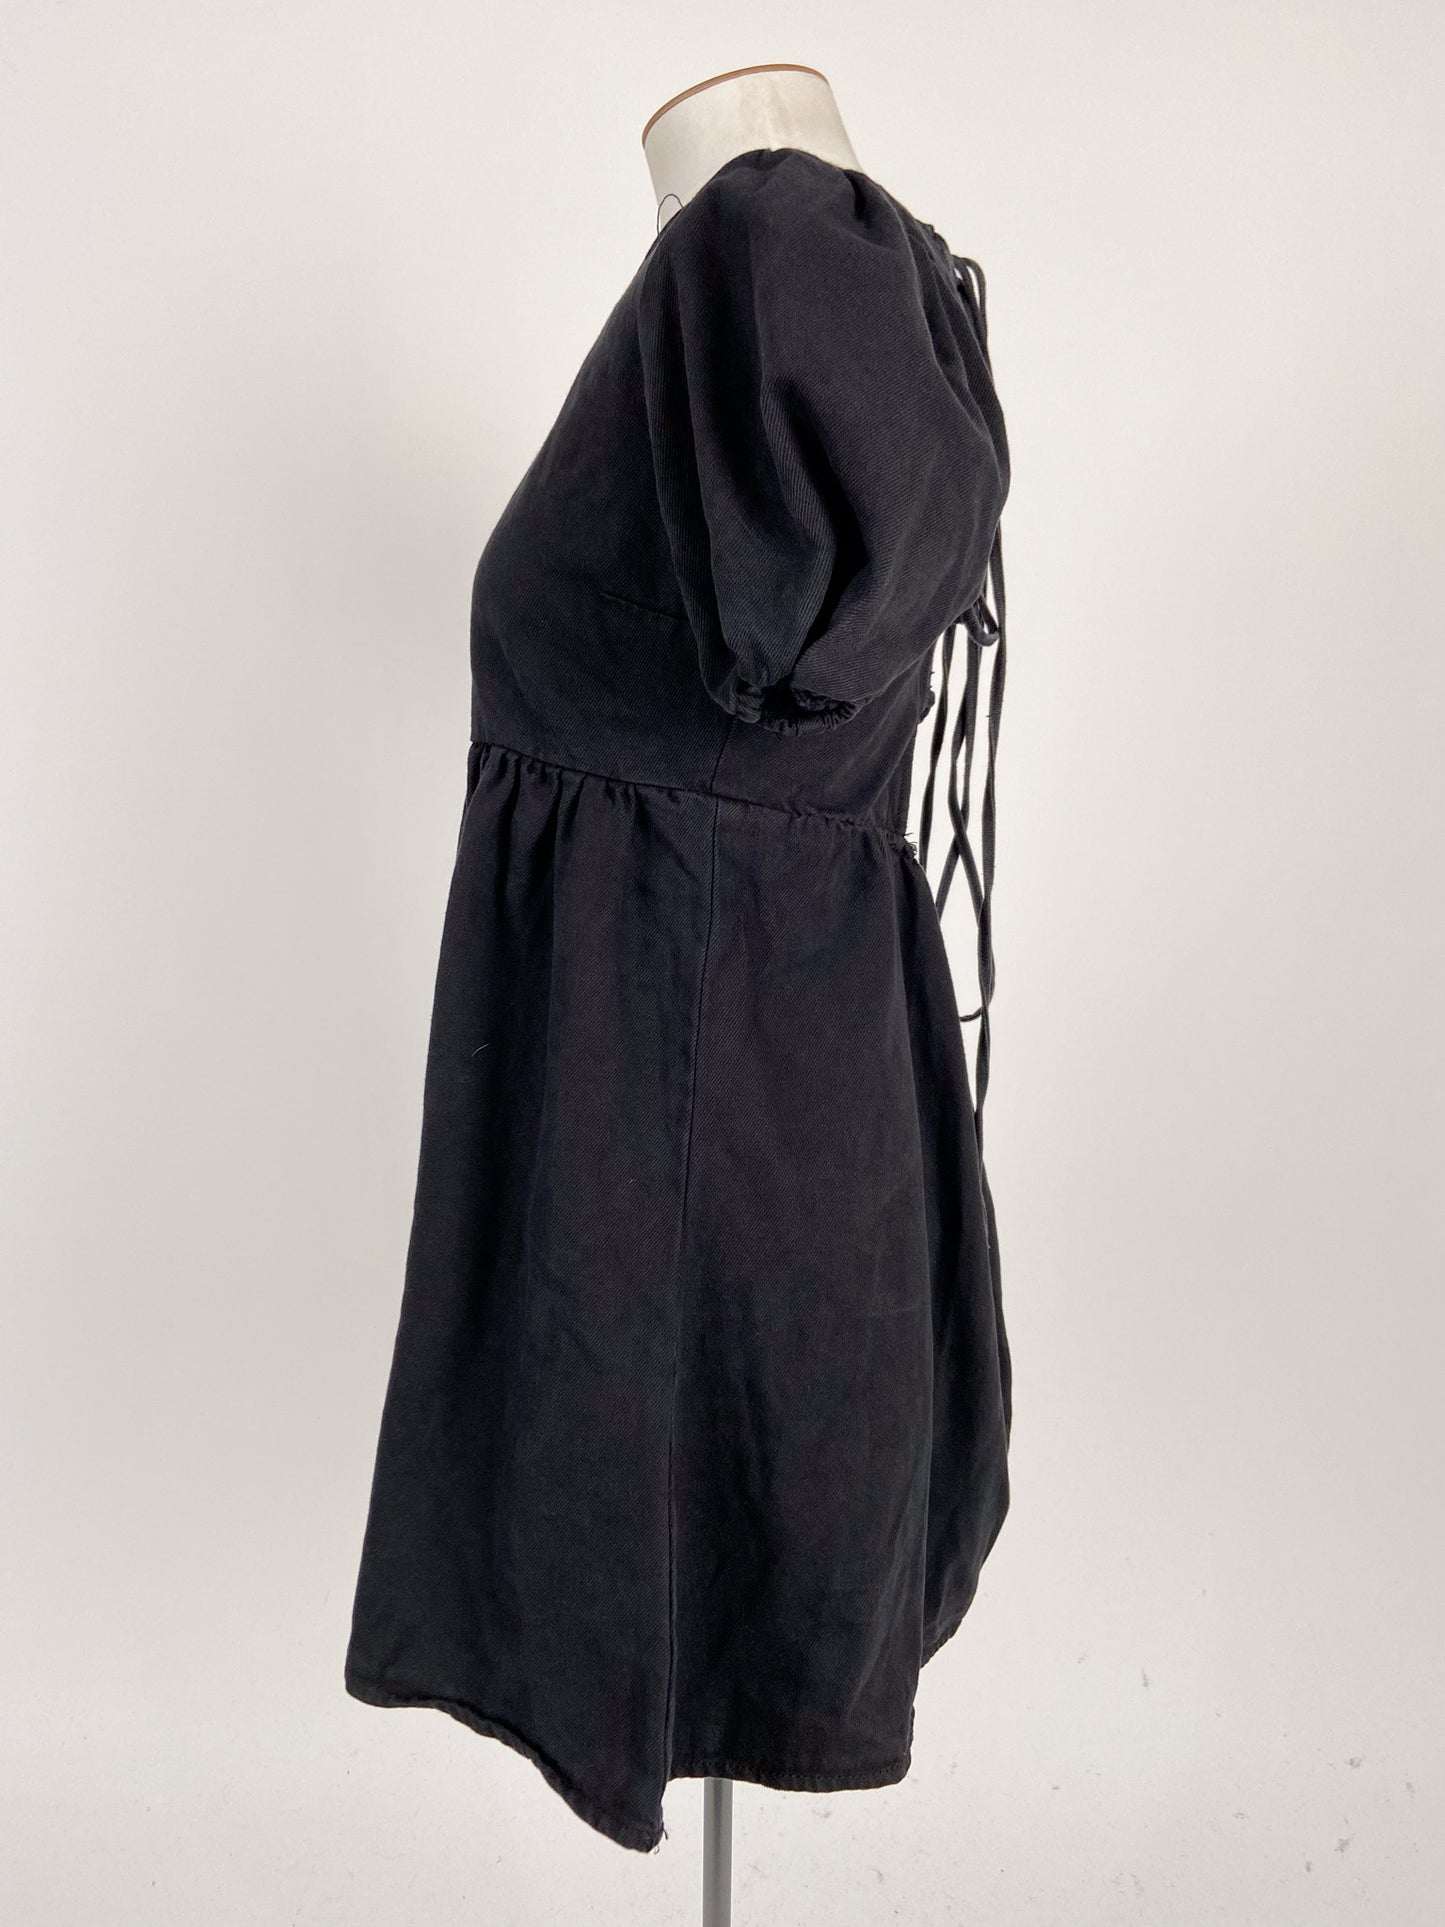 Cotton On | Black Casual Dress | Size L